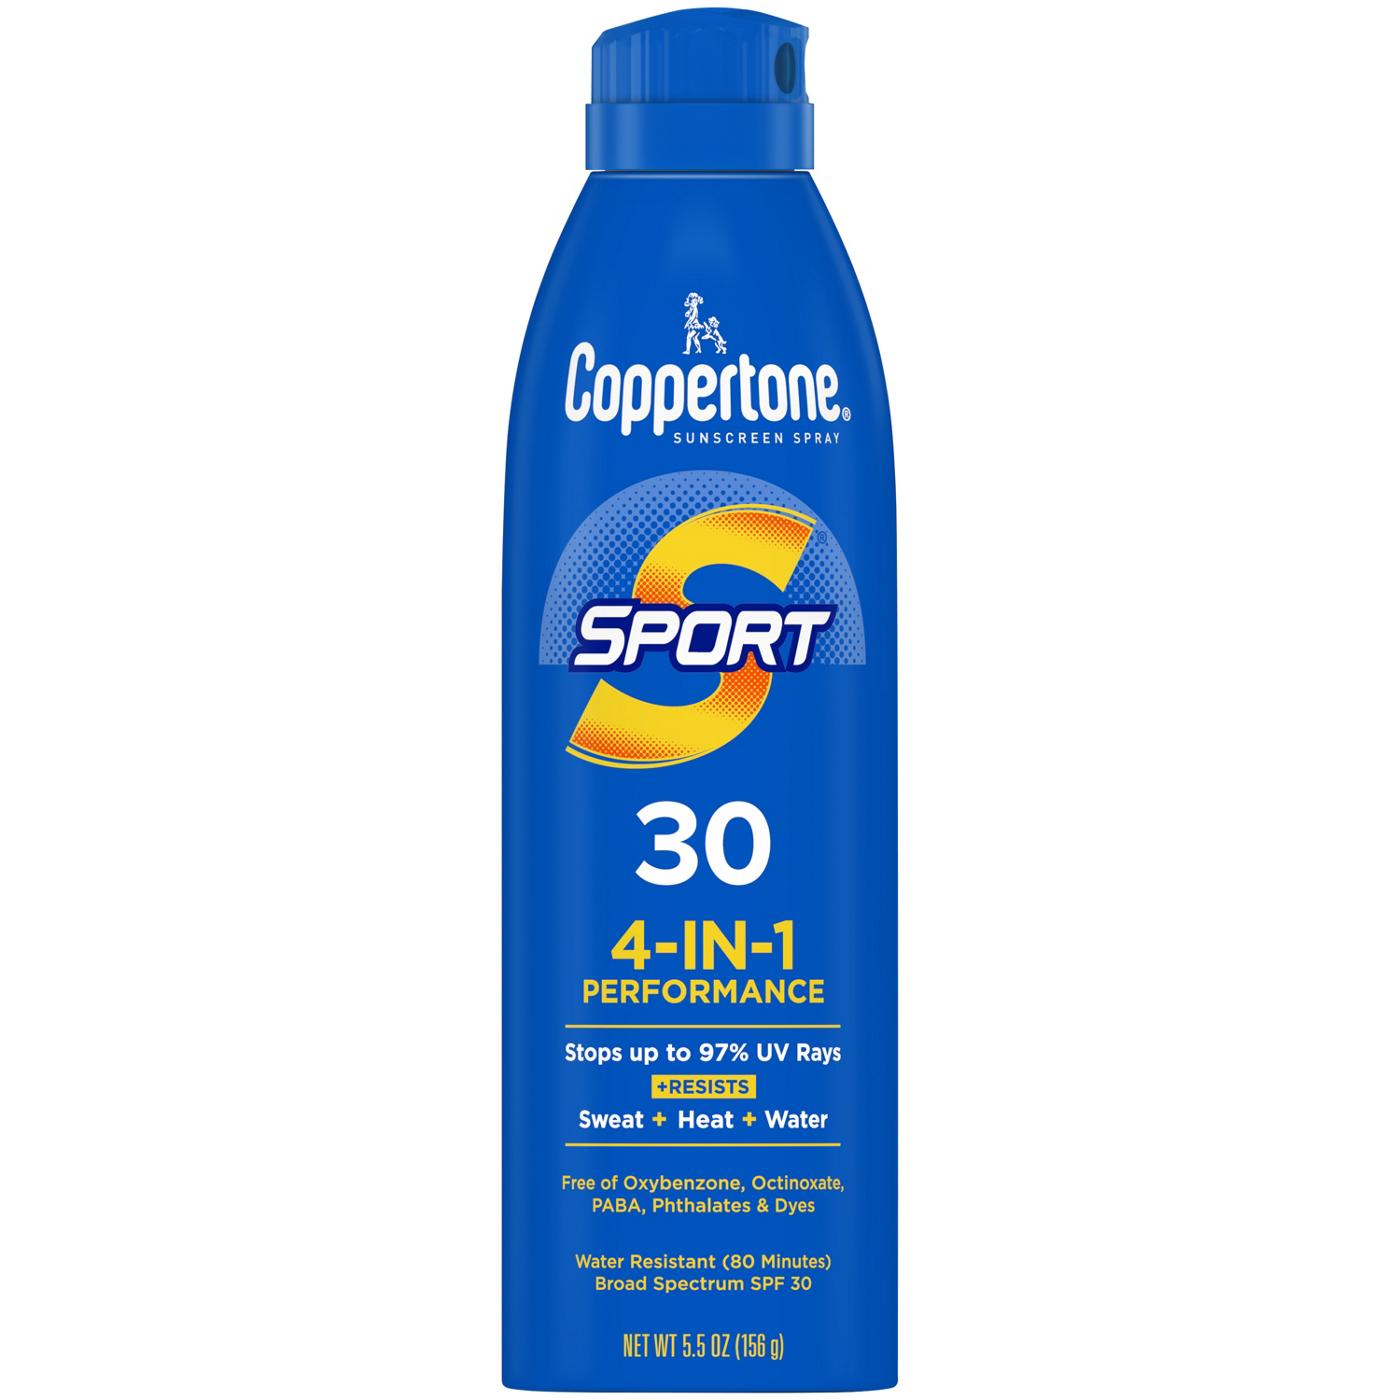 Coppertone Sport Sunscreen Spray SPF 30; image 1 of 3